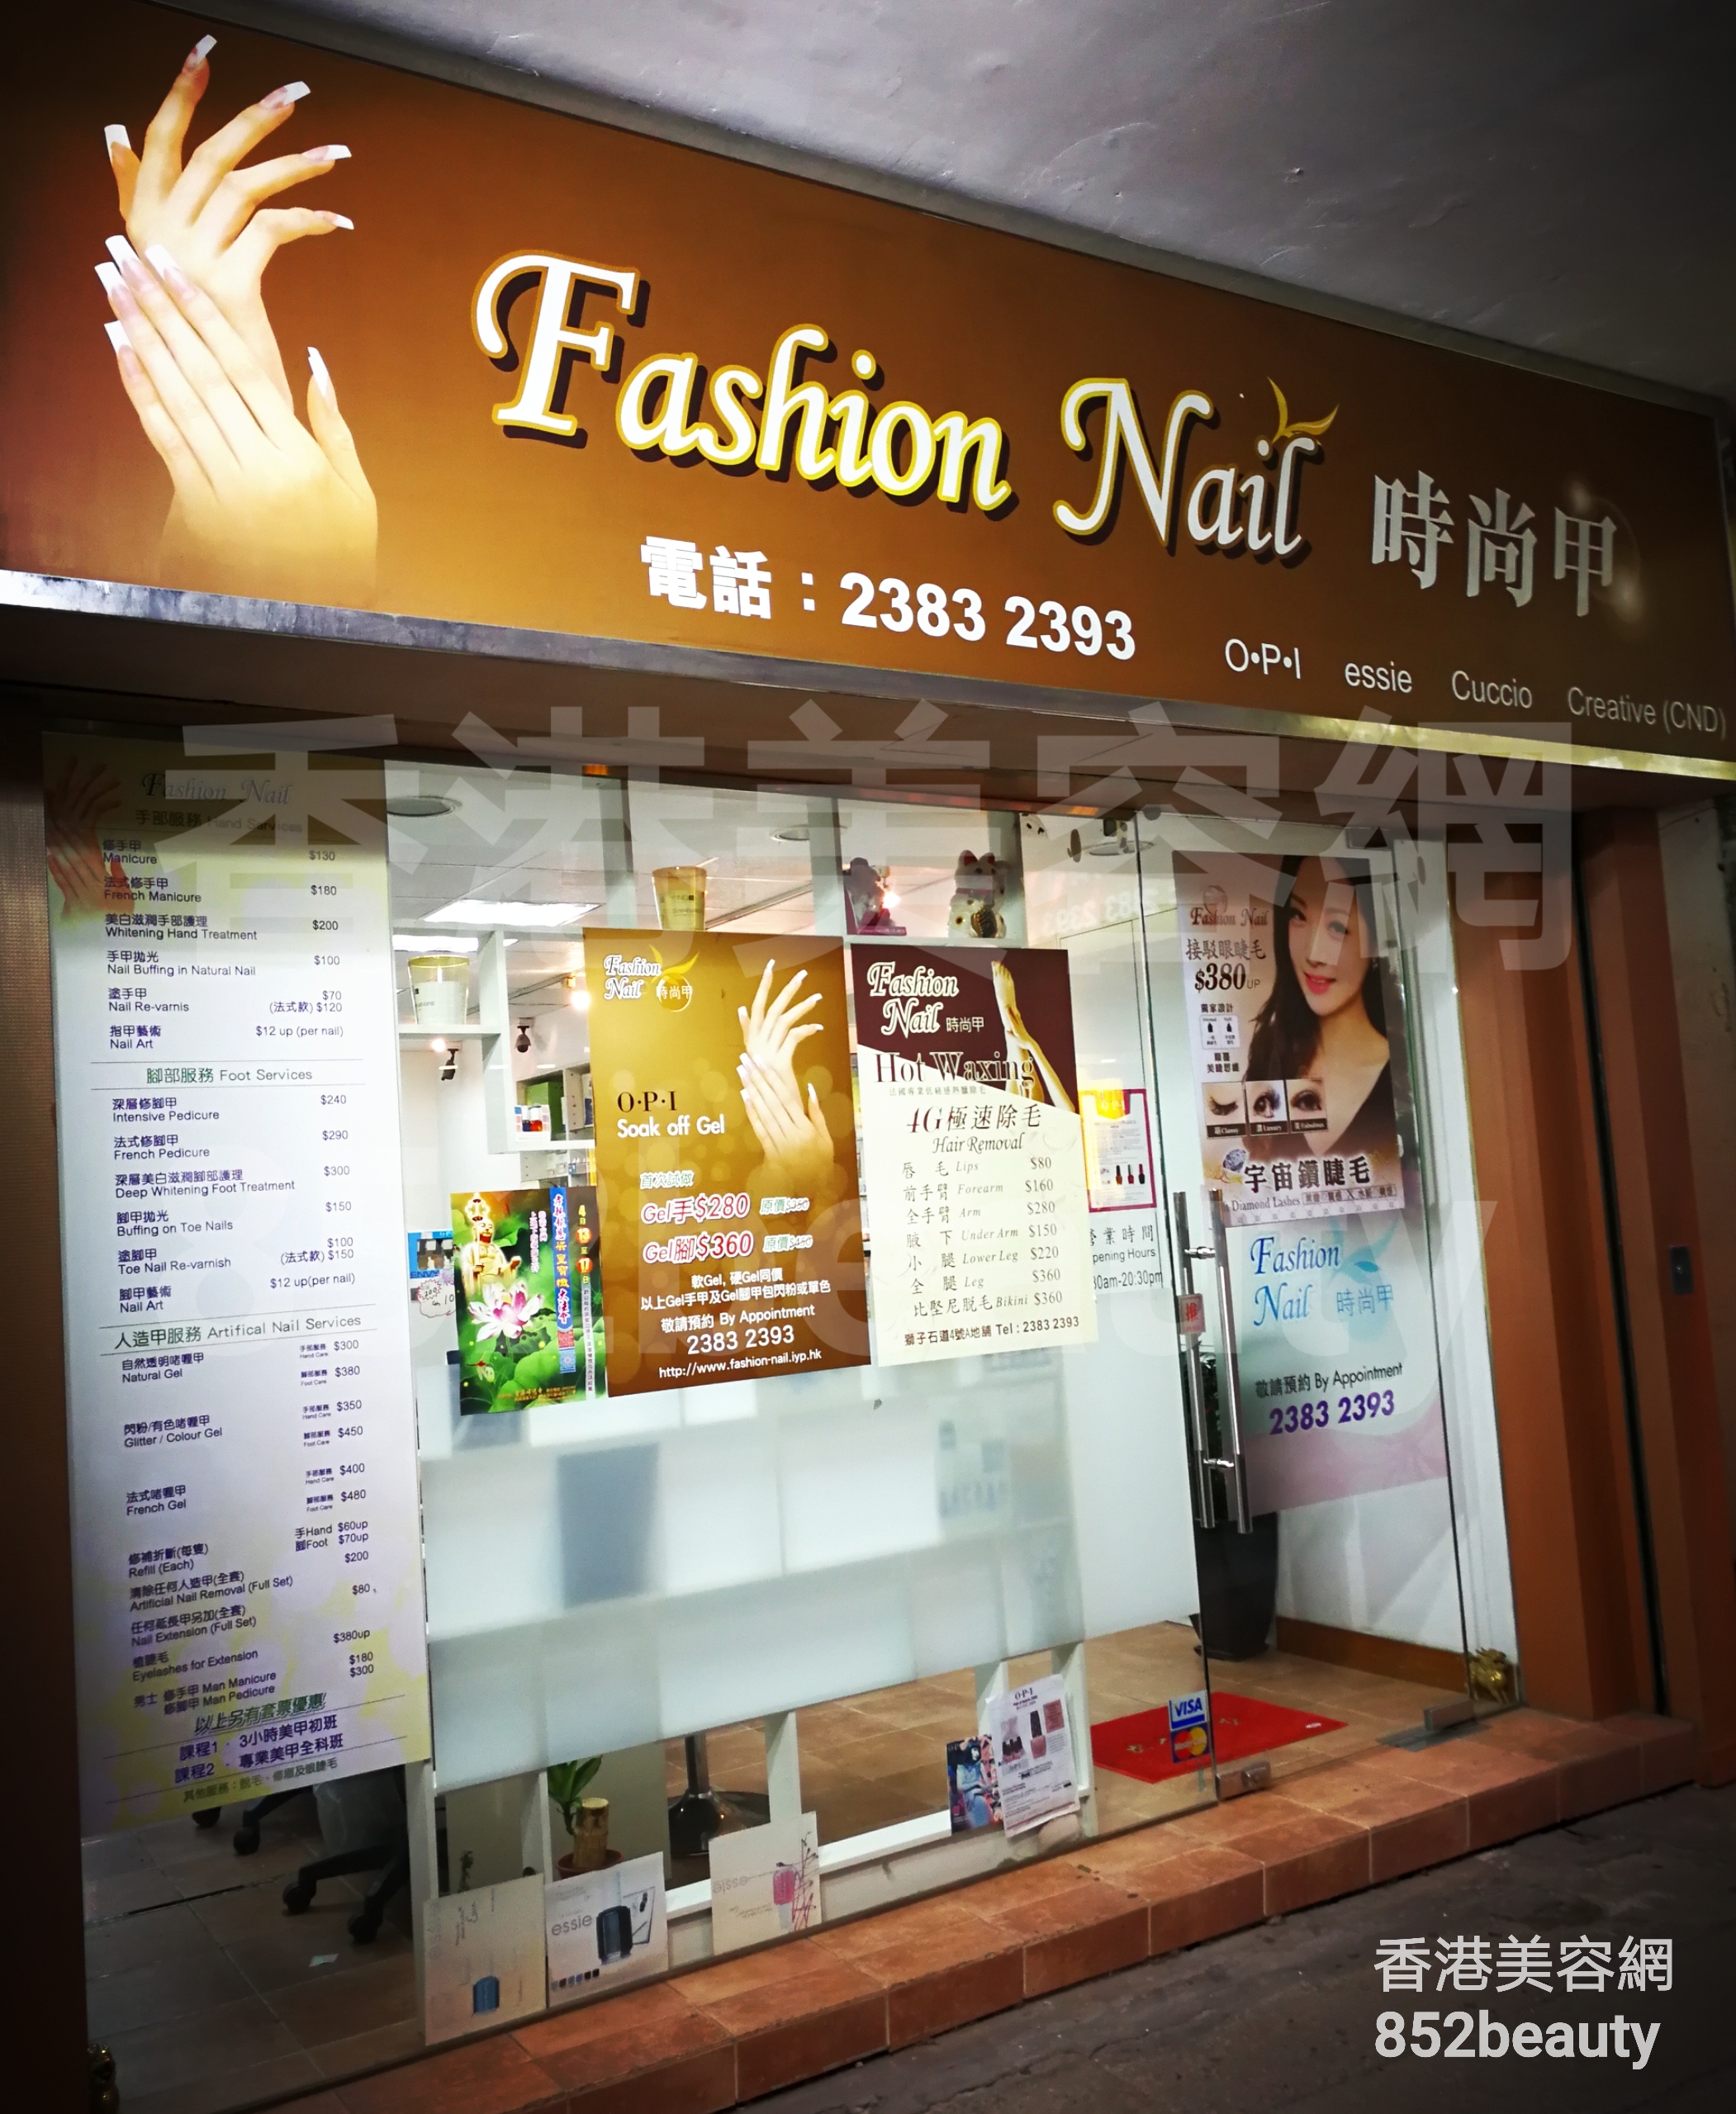 香港美容網 Hong Kong Beauty Salon 美容院 / 美容師: Fashion Nail 時尚甲